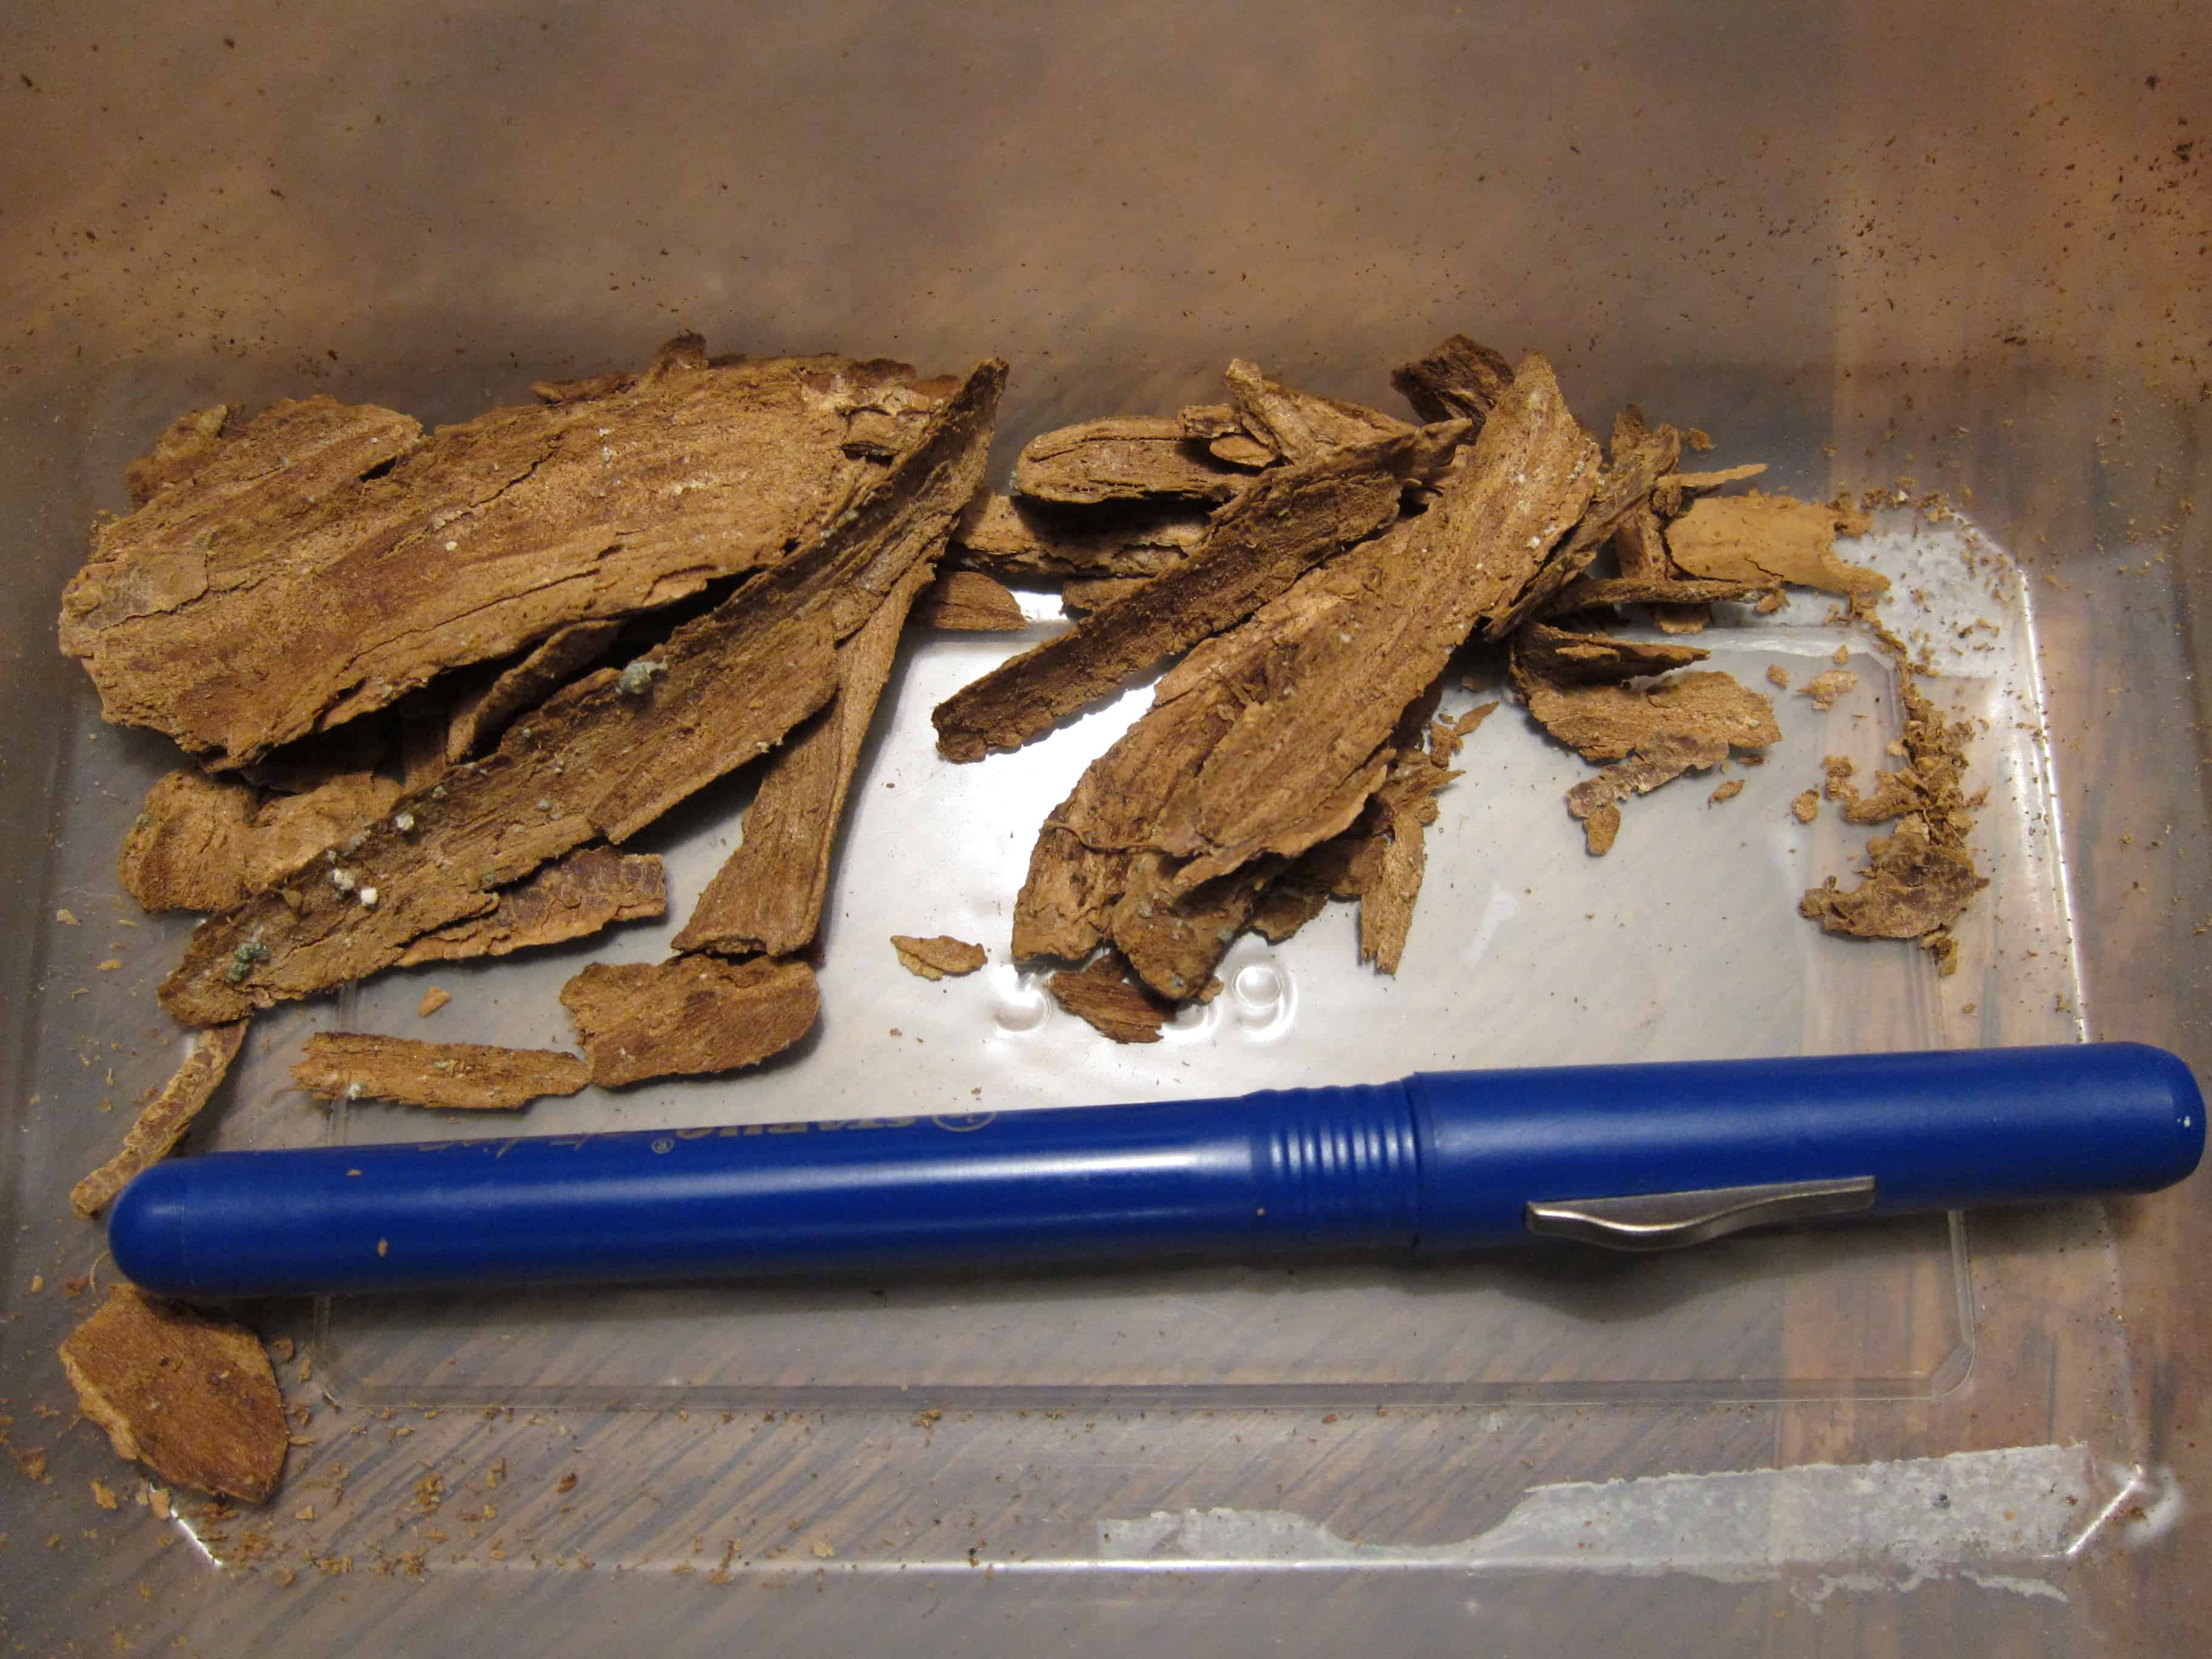 Dried bark of the plant Tabernanthe iboga.